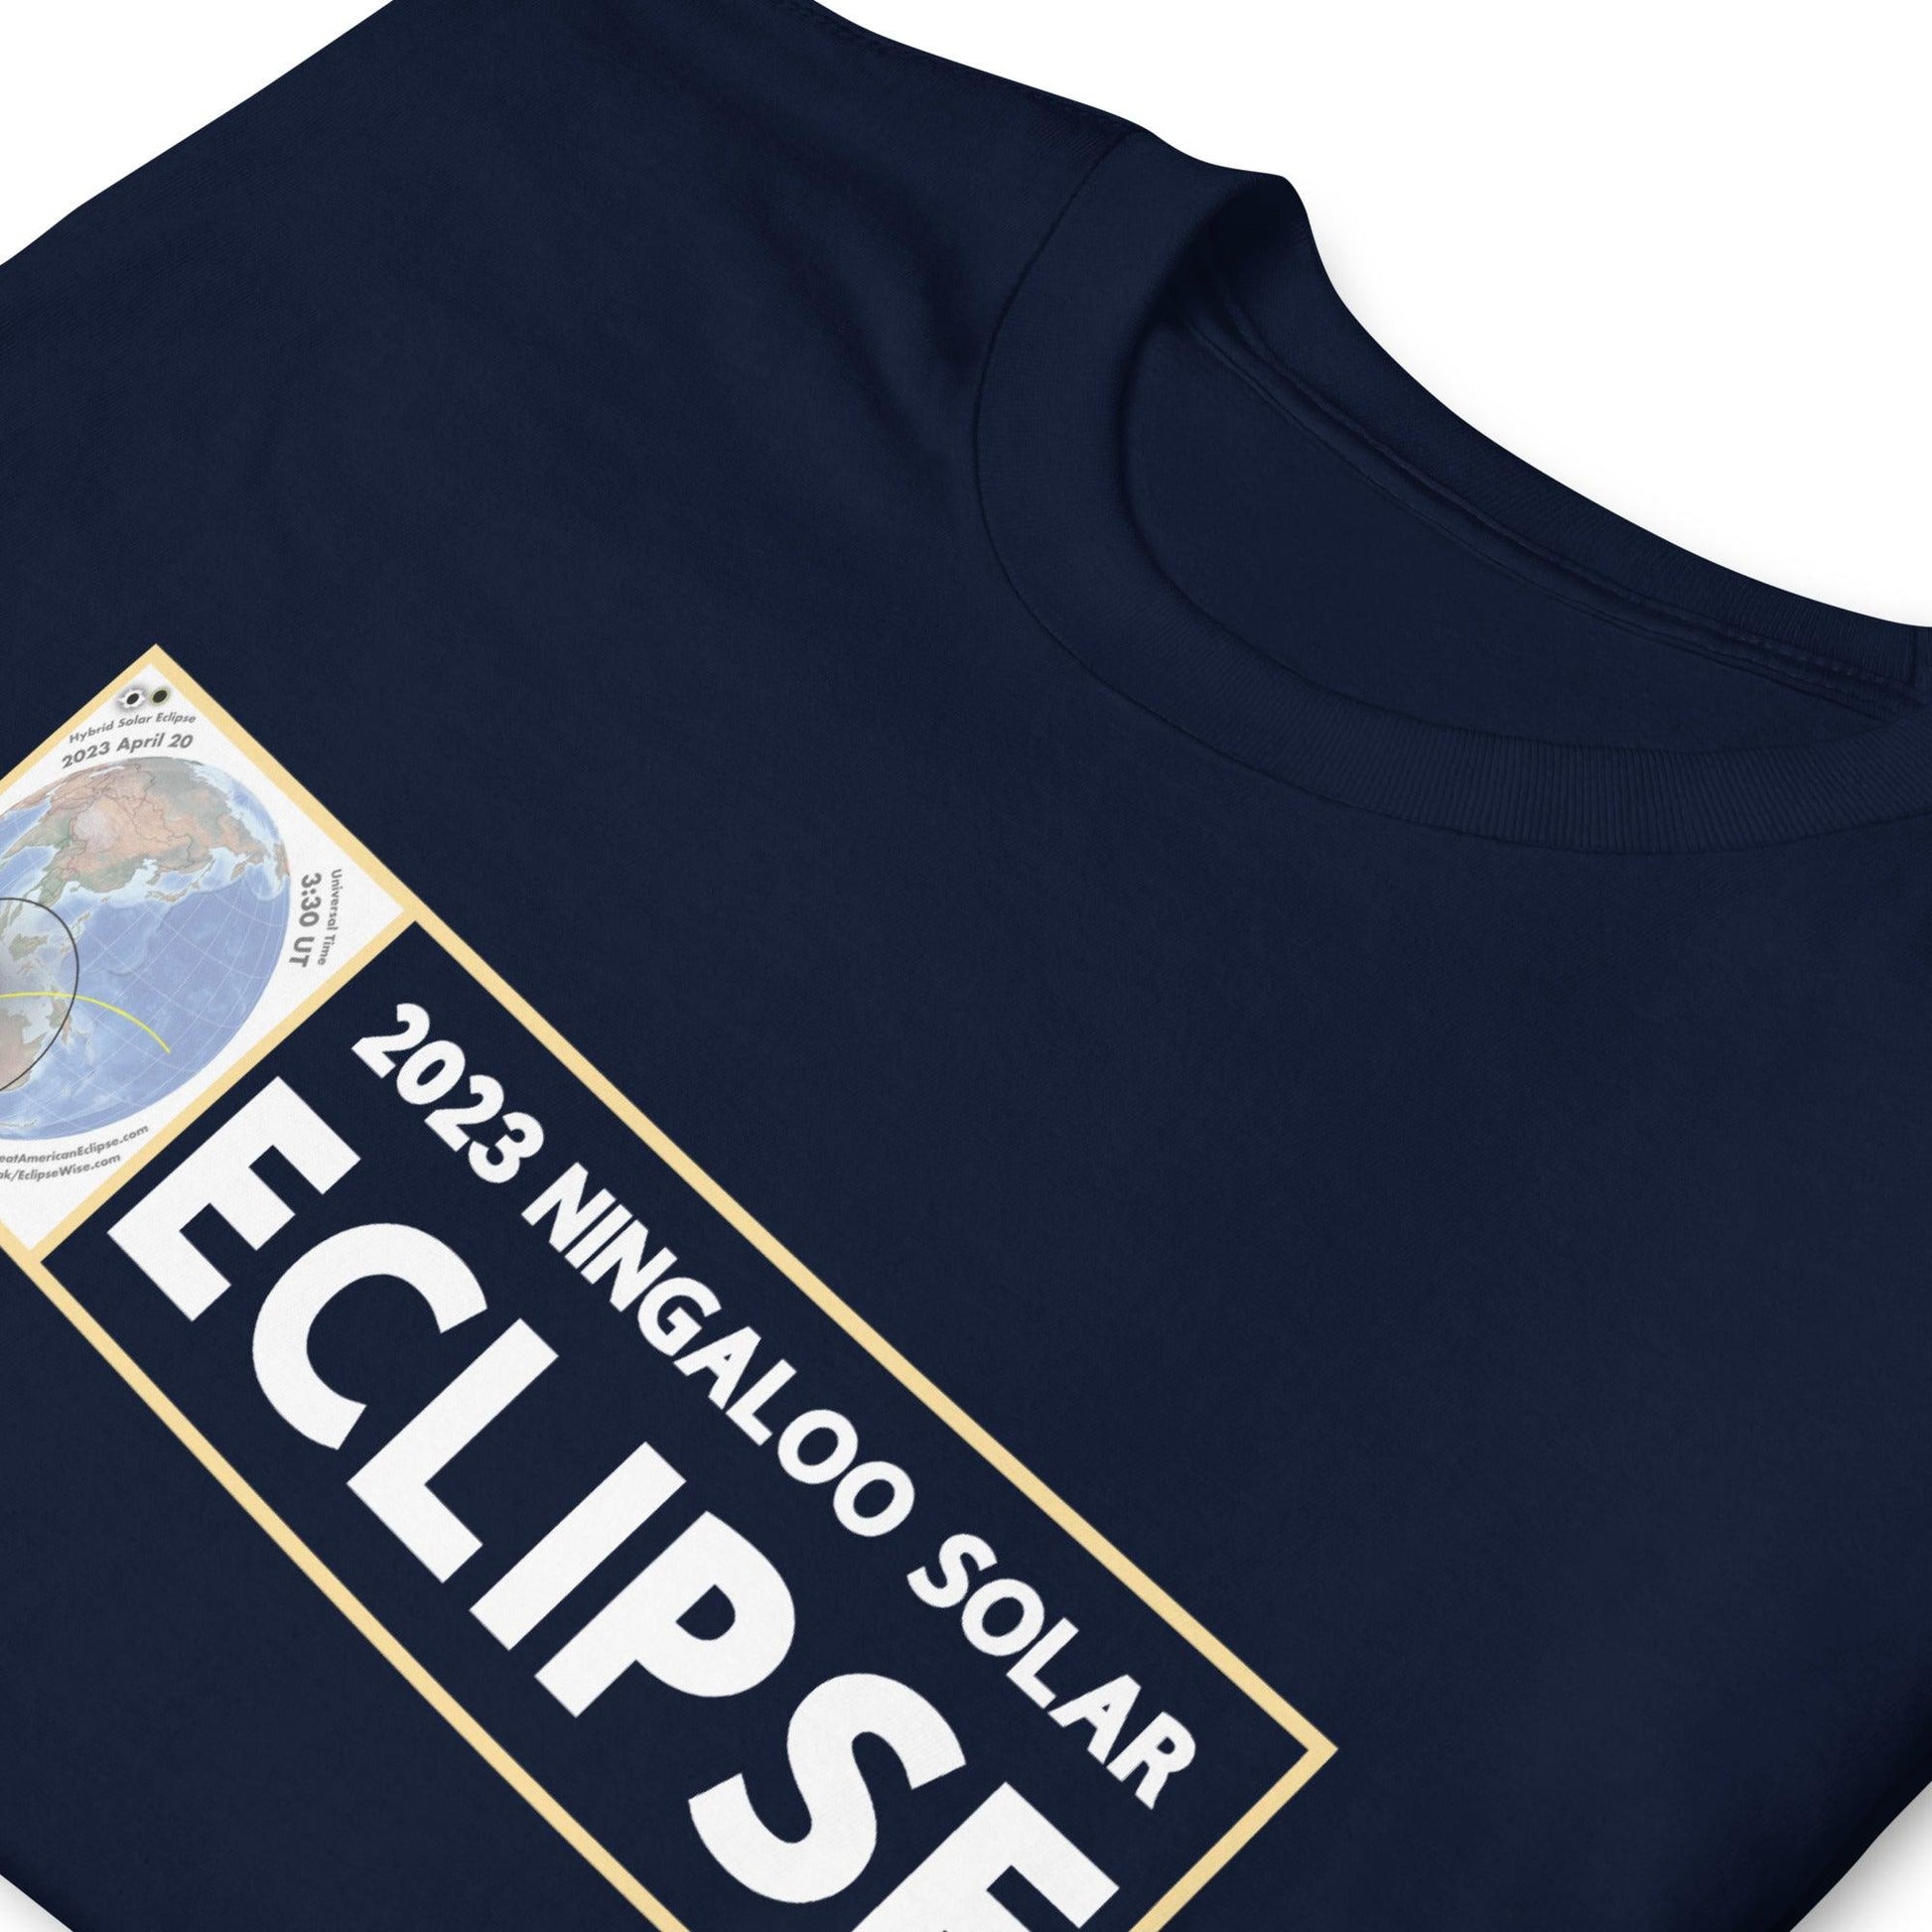 Ningaloo Solar Eclipse 2023 - Astro TShirts